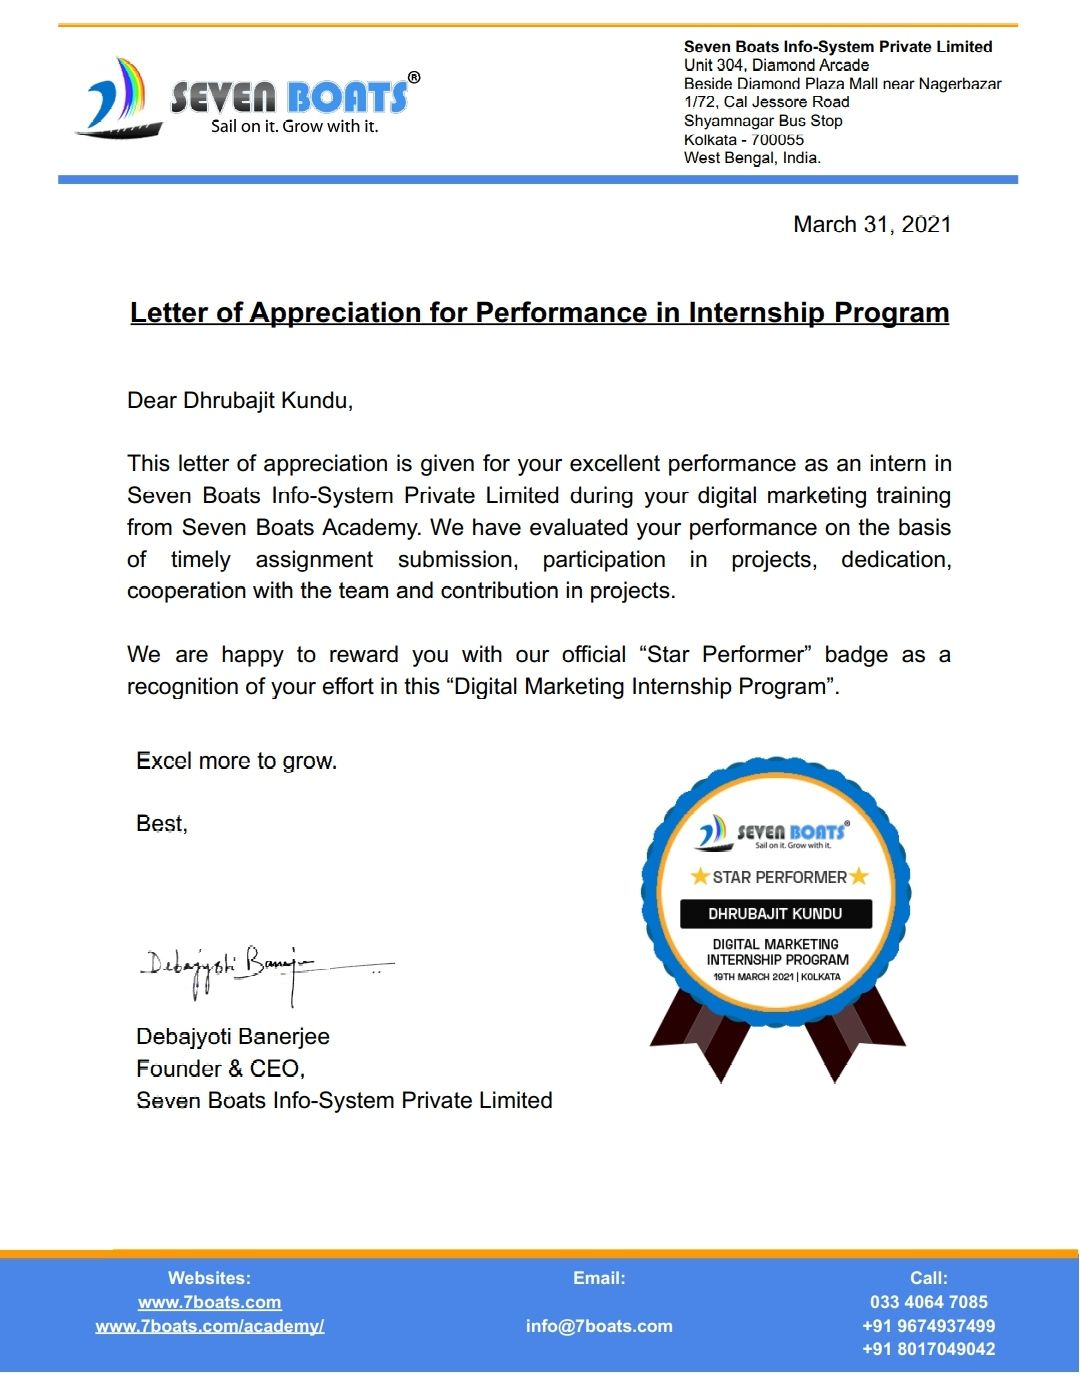 Digital Marketing Internship letter and star performer badge from Seven Boats